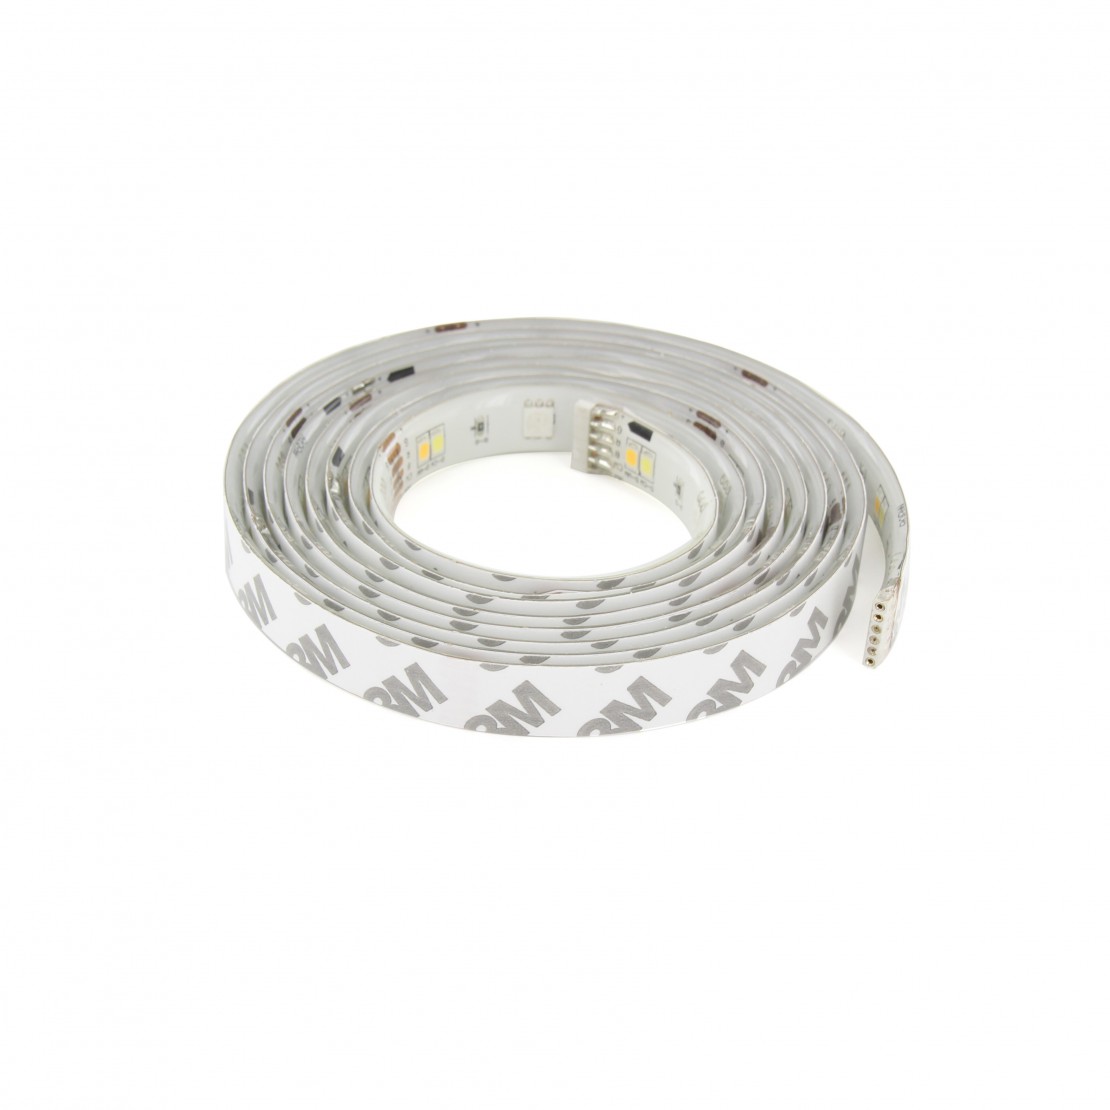 StripLED - ruban lumineux LED connecté Bluetooth 